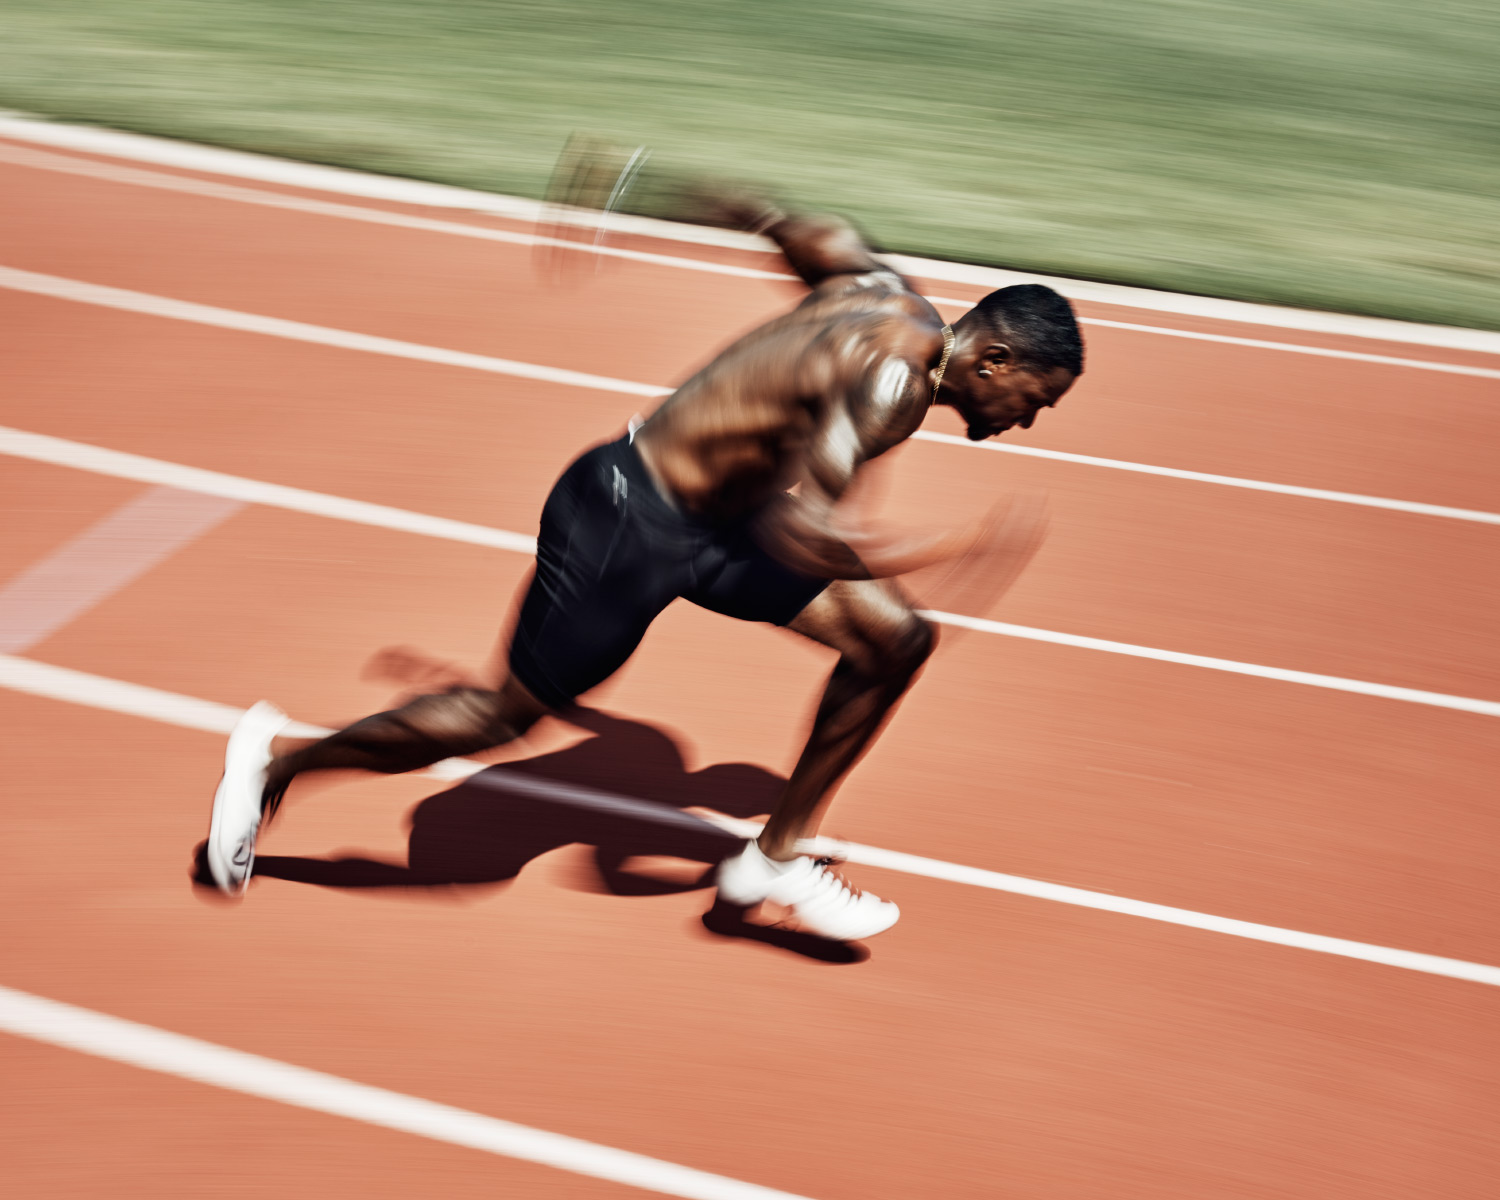 Gold Medalist sprinter Justin Gatlin practices at Montverde Academy in Montverde, FL on Friday, July 22, 2016. Gatlin races Usain Bolt in the 100 meter on August 14.